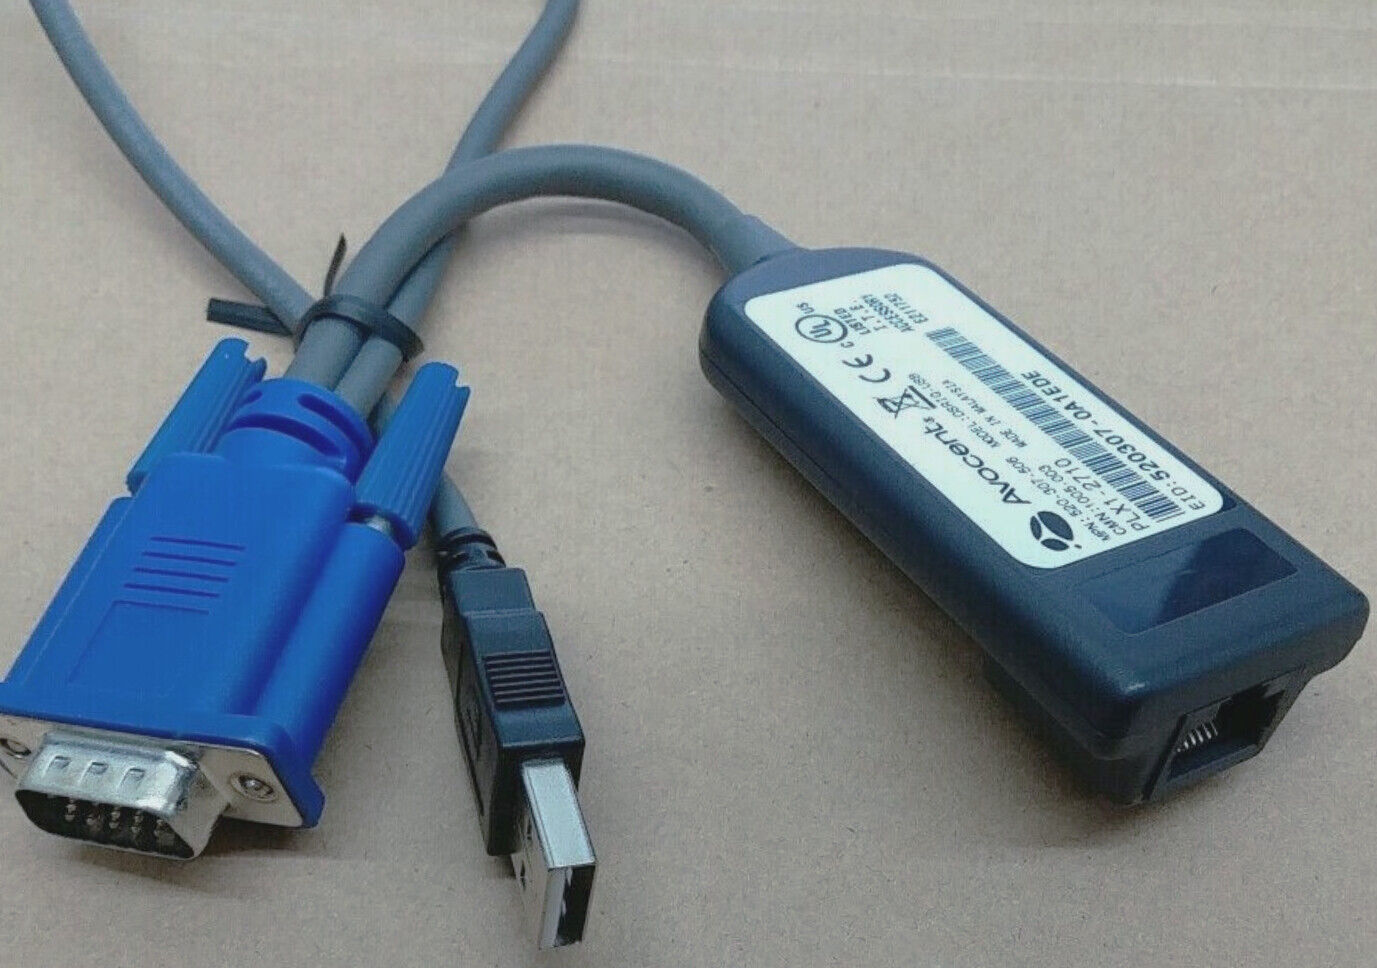 Avocent Autoview AVRIQ-USB USB AV KVM Switch Server Module cable